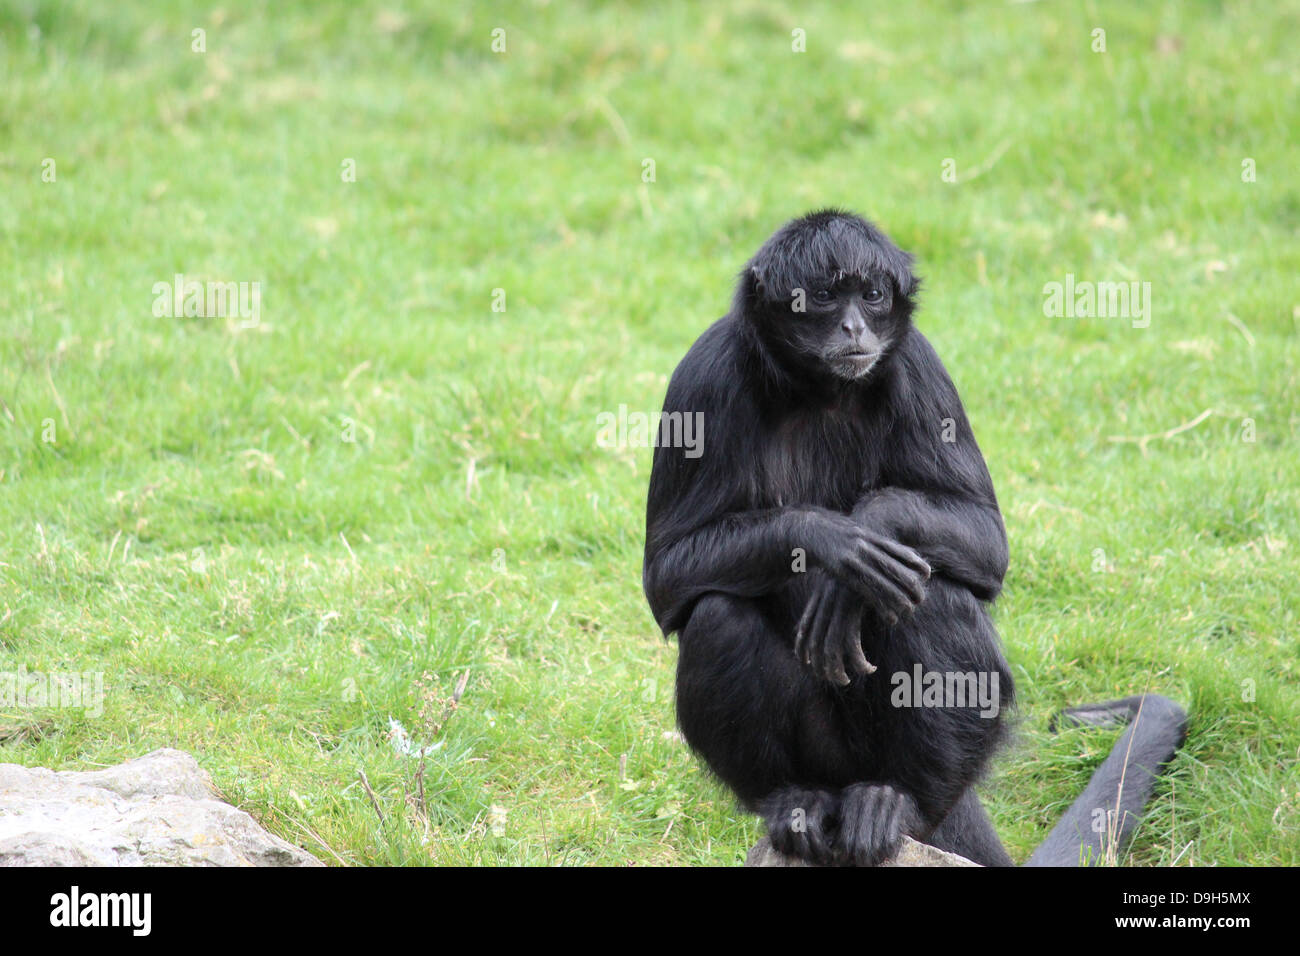 Black monkey sits on a rock. Stock Photo